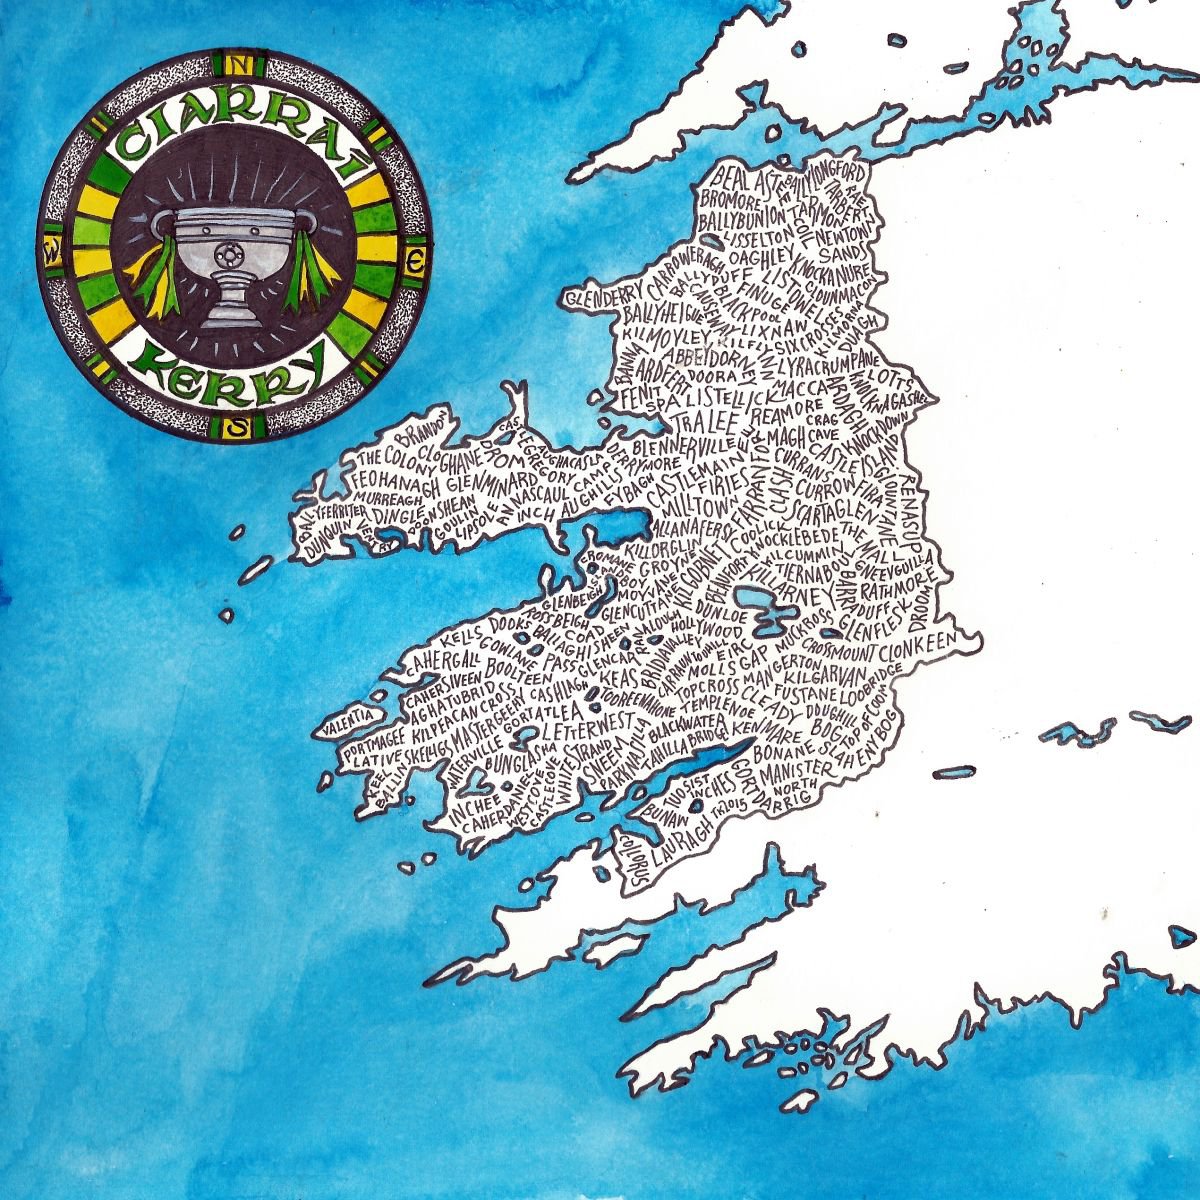 County Kerry Word Map by Terri Kelleher